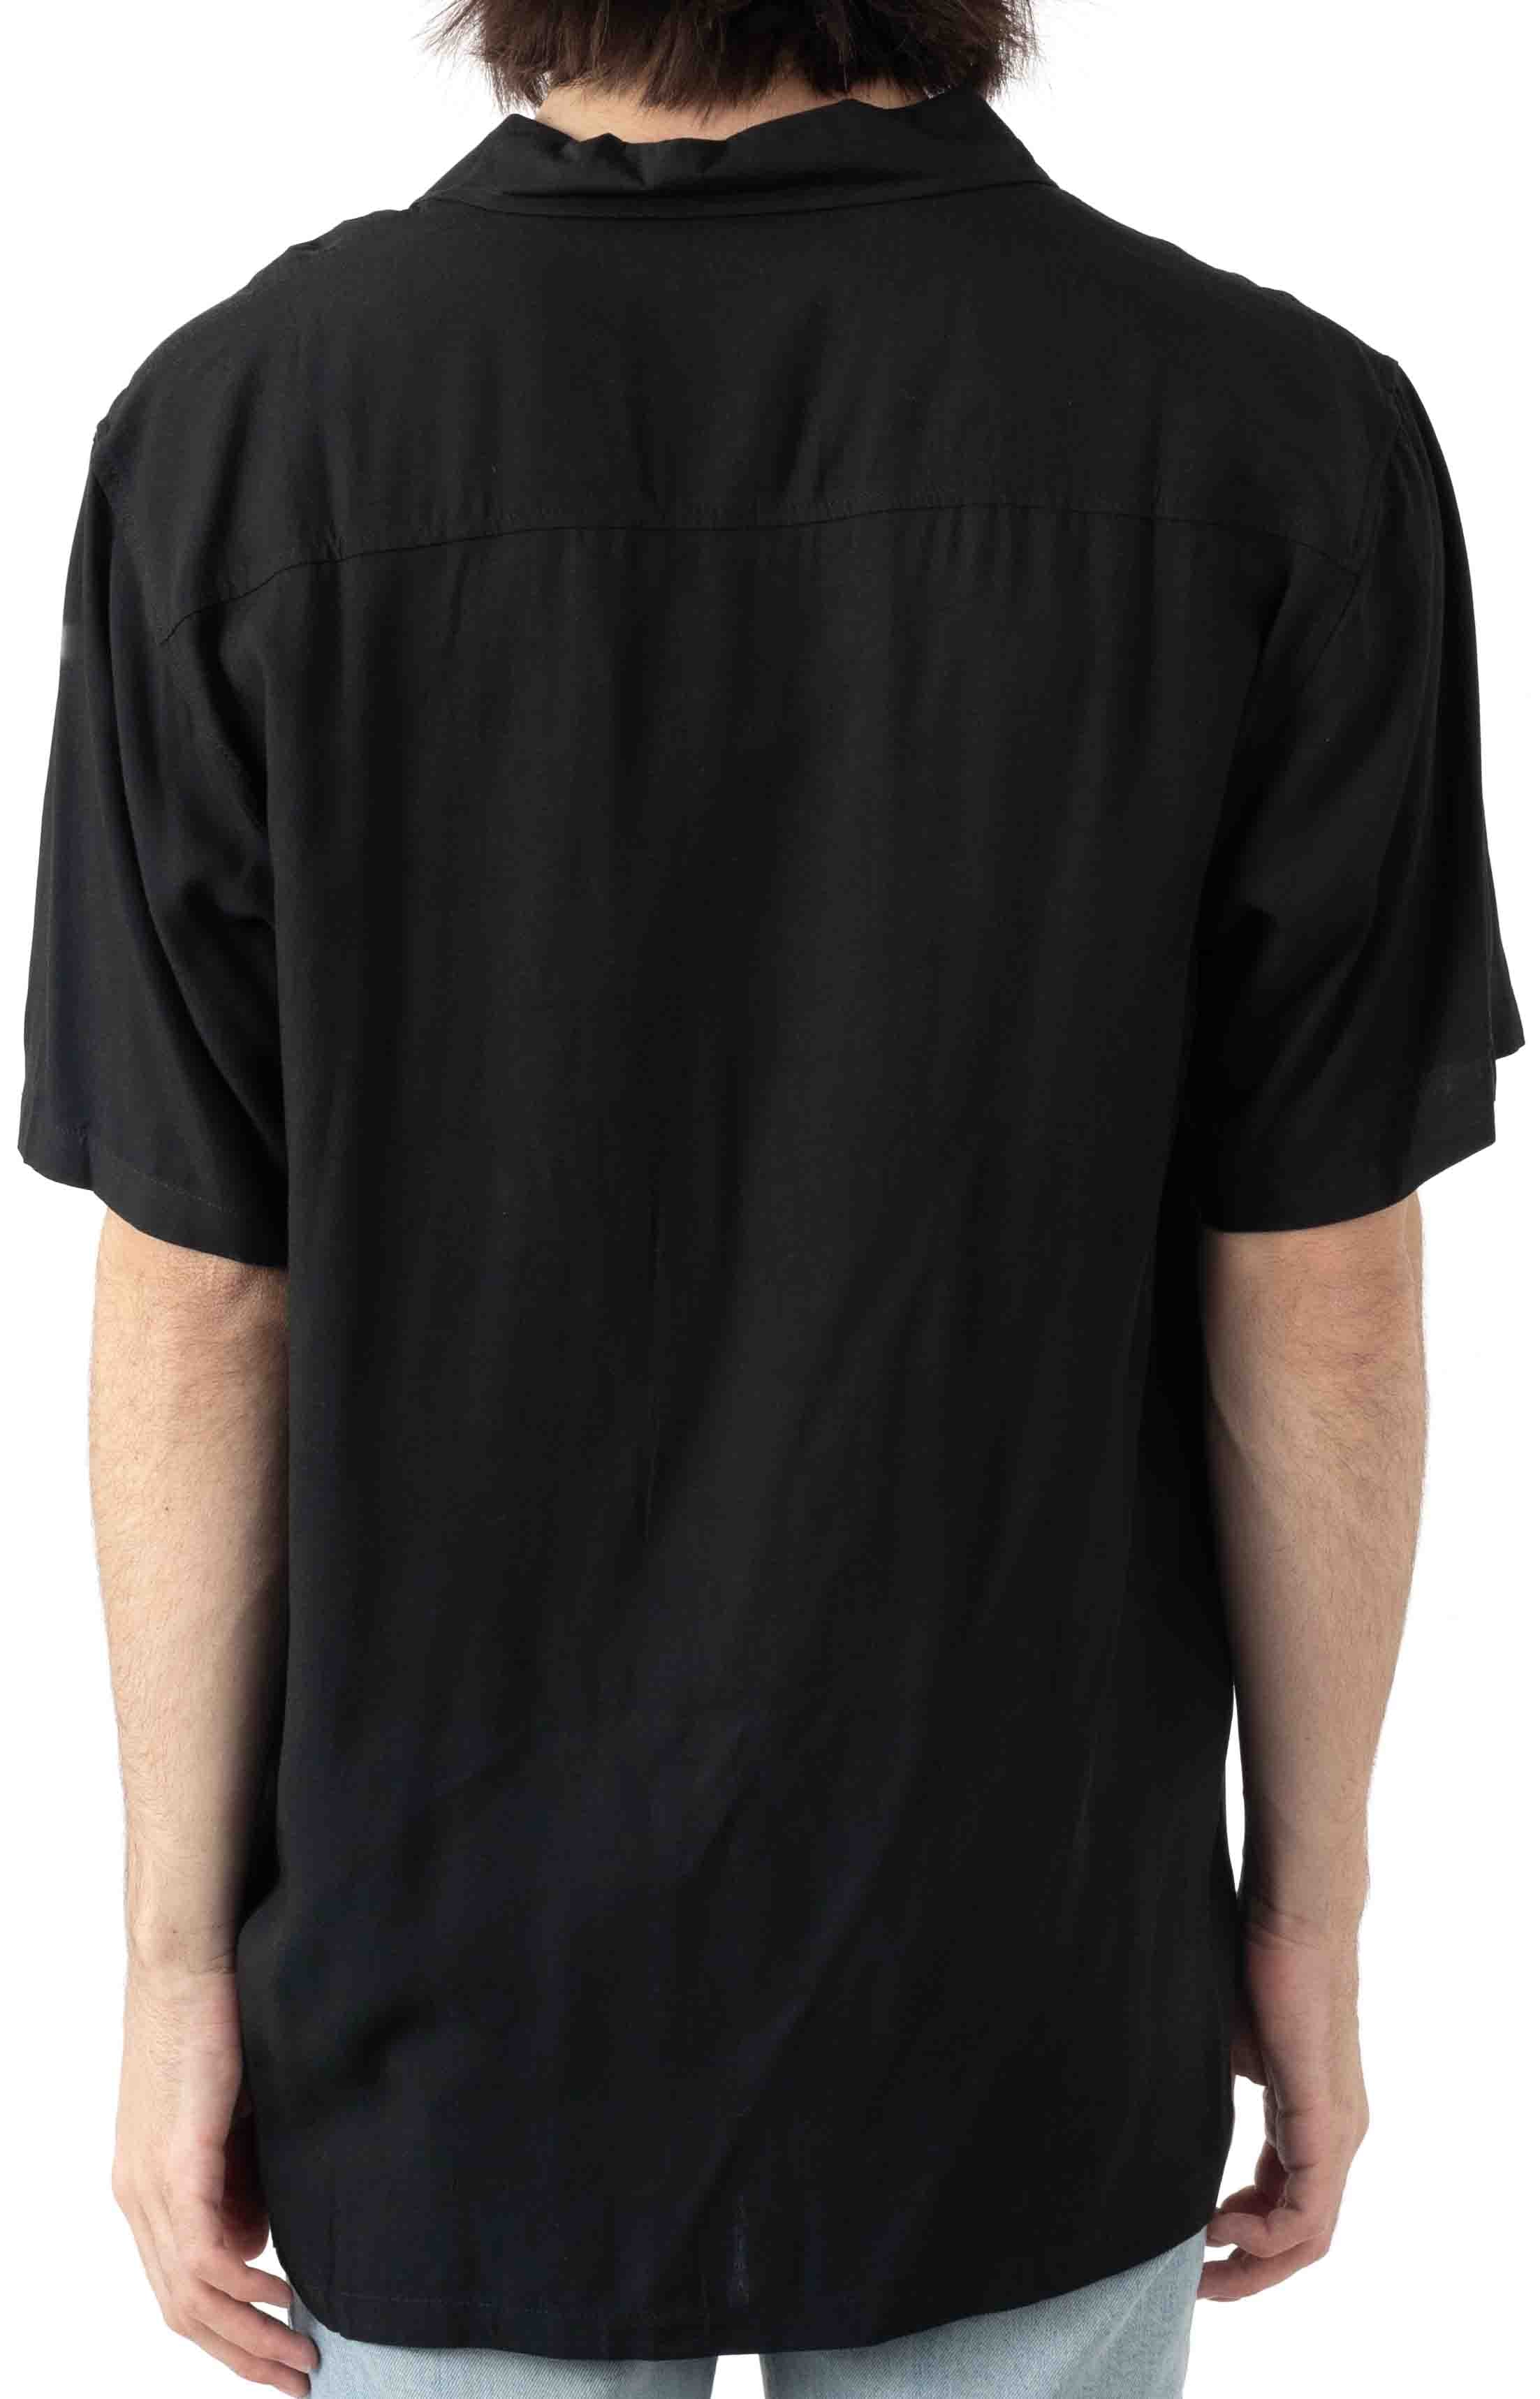 Yesternow Woven Button-Up Shirt